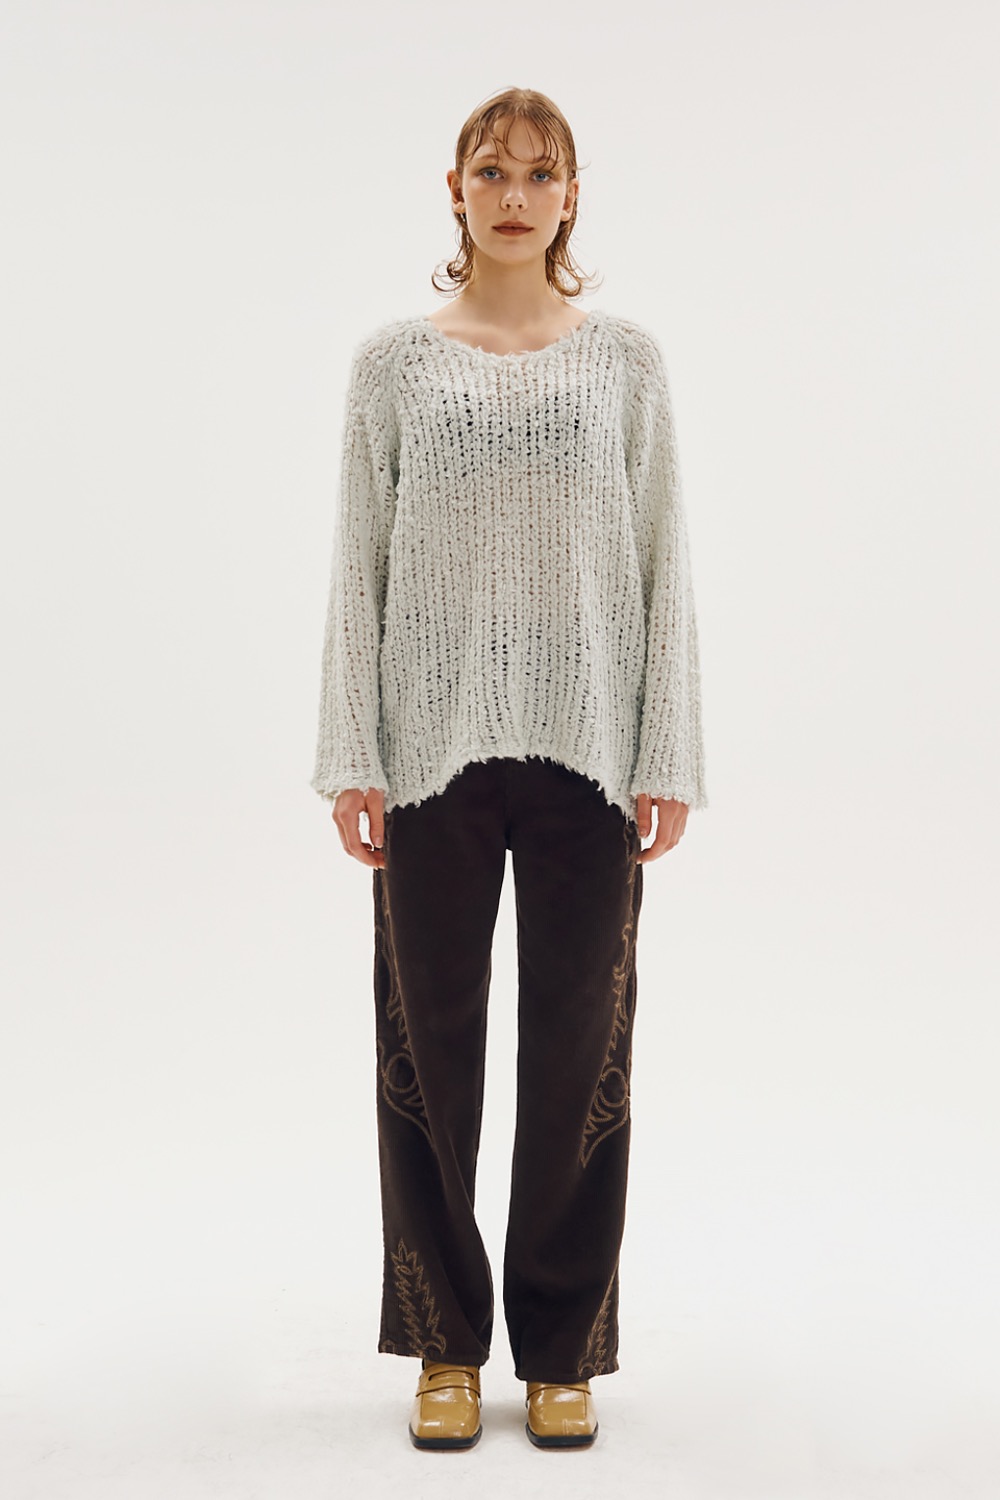 Handle v-line knit [Gray]